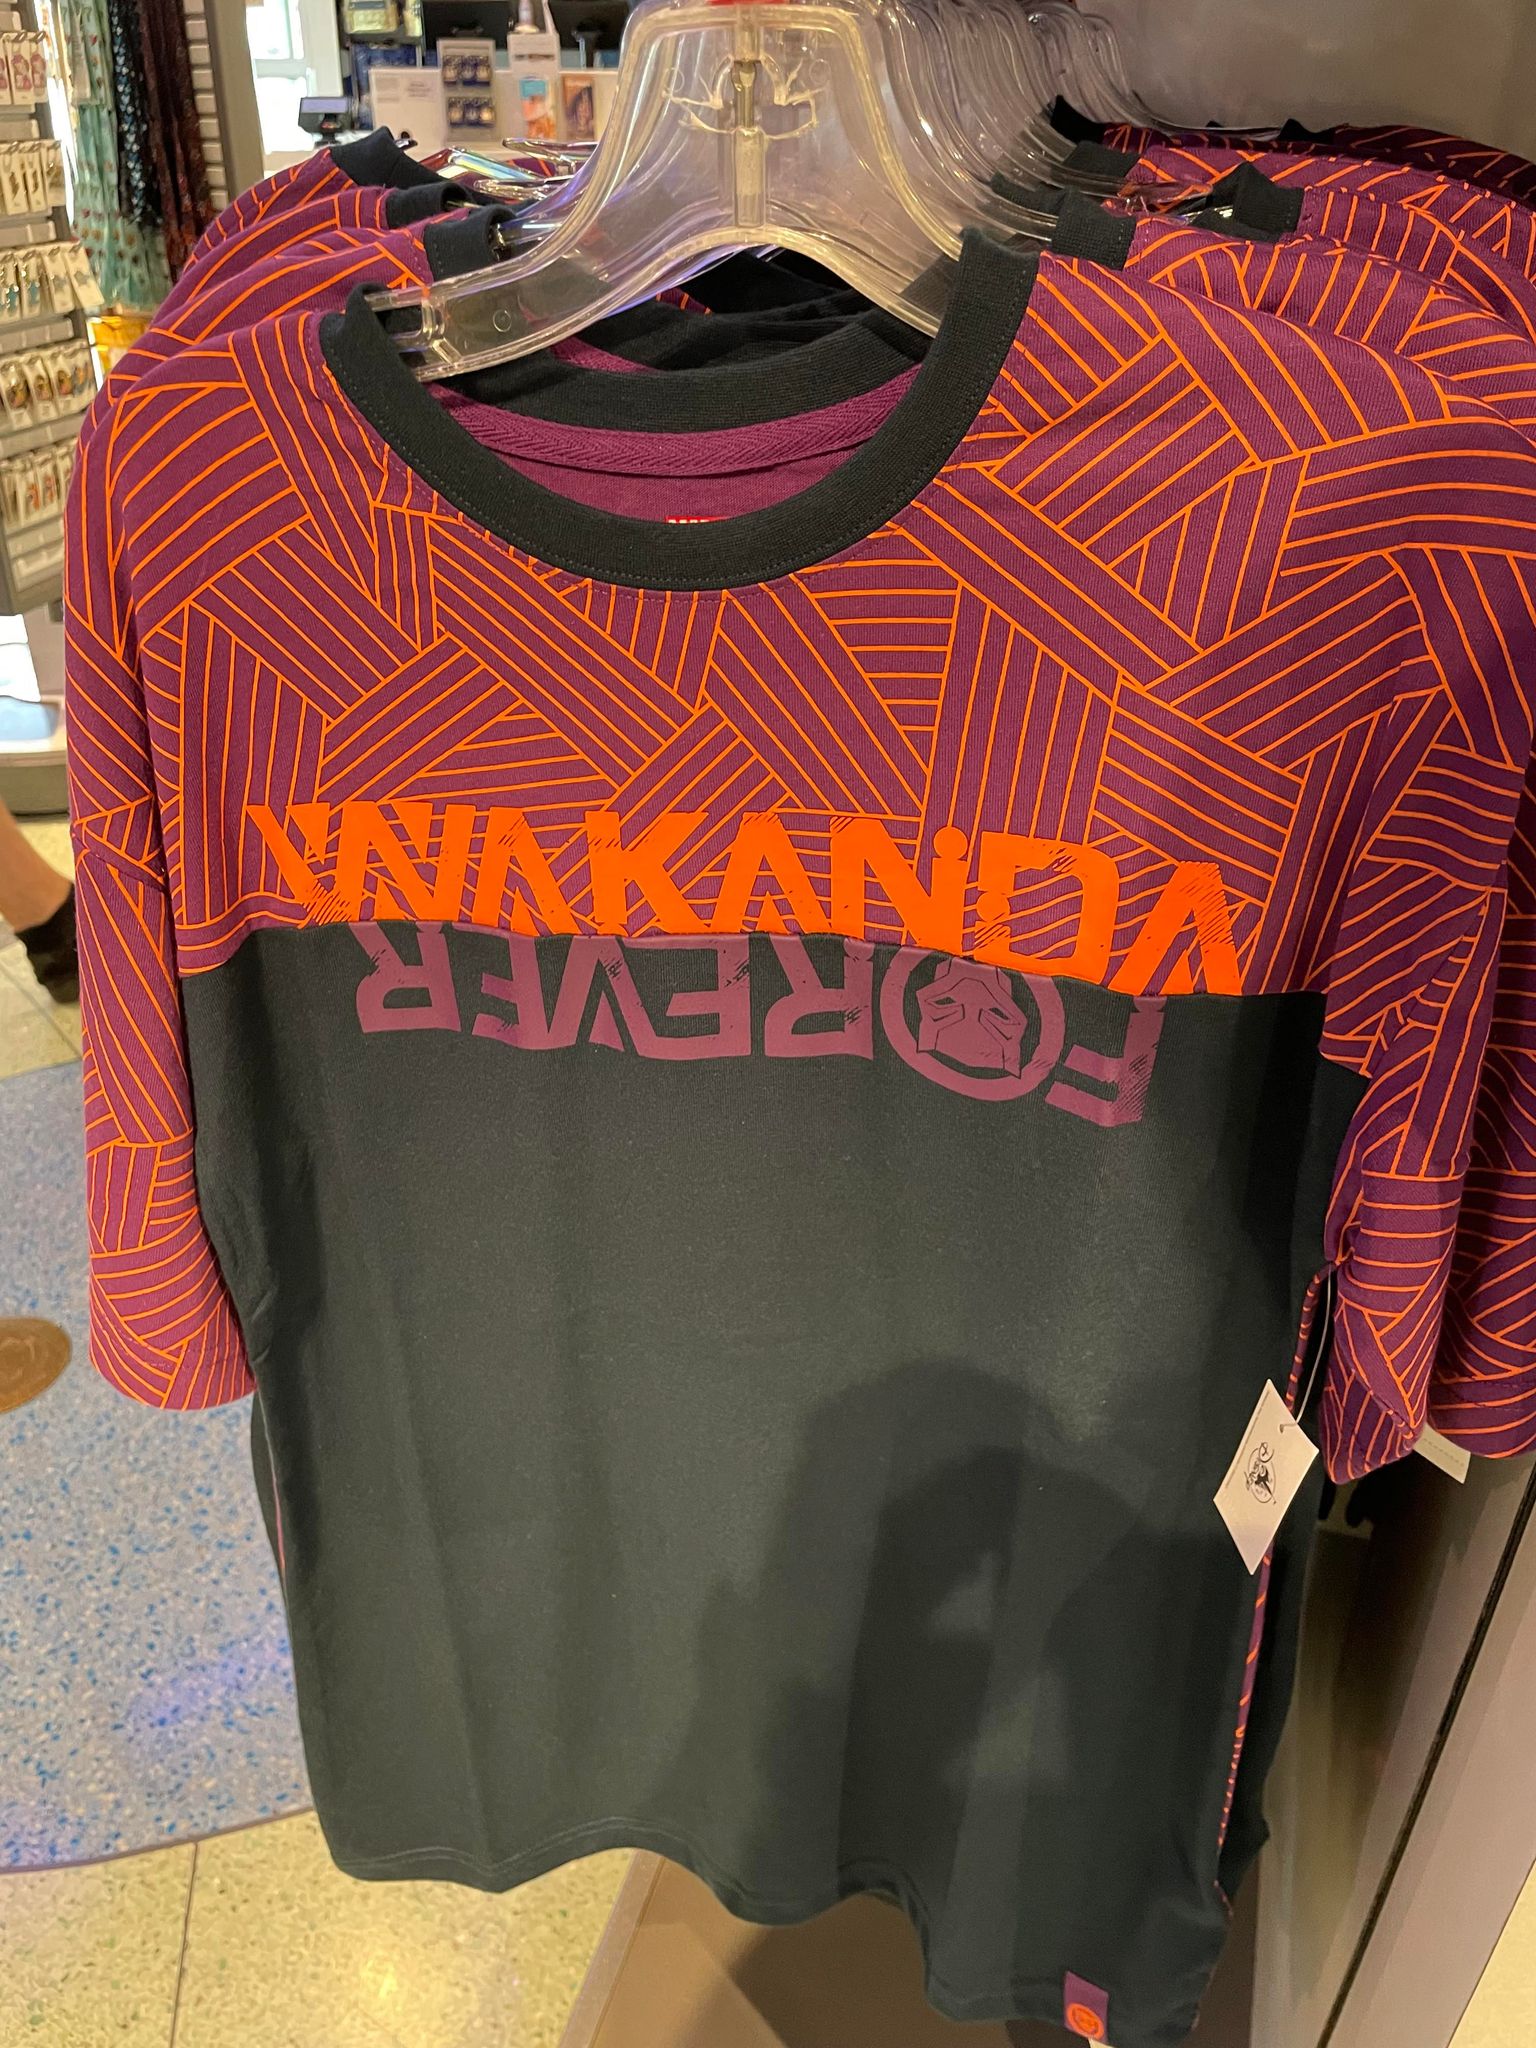 wakanda forever loungewear